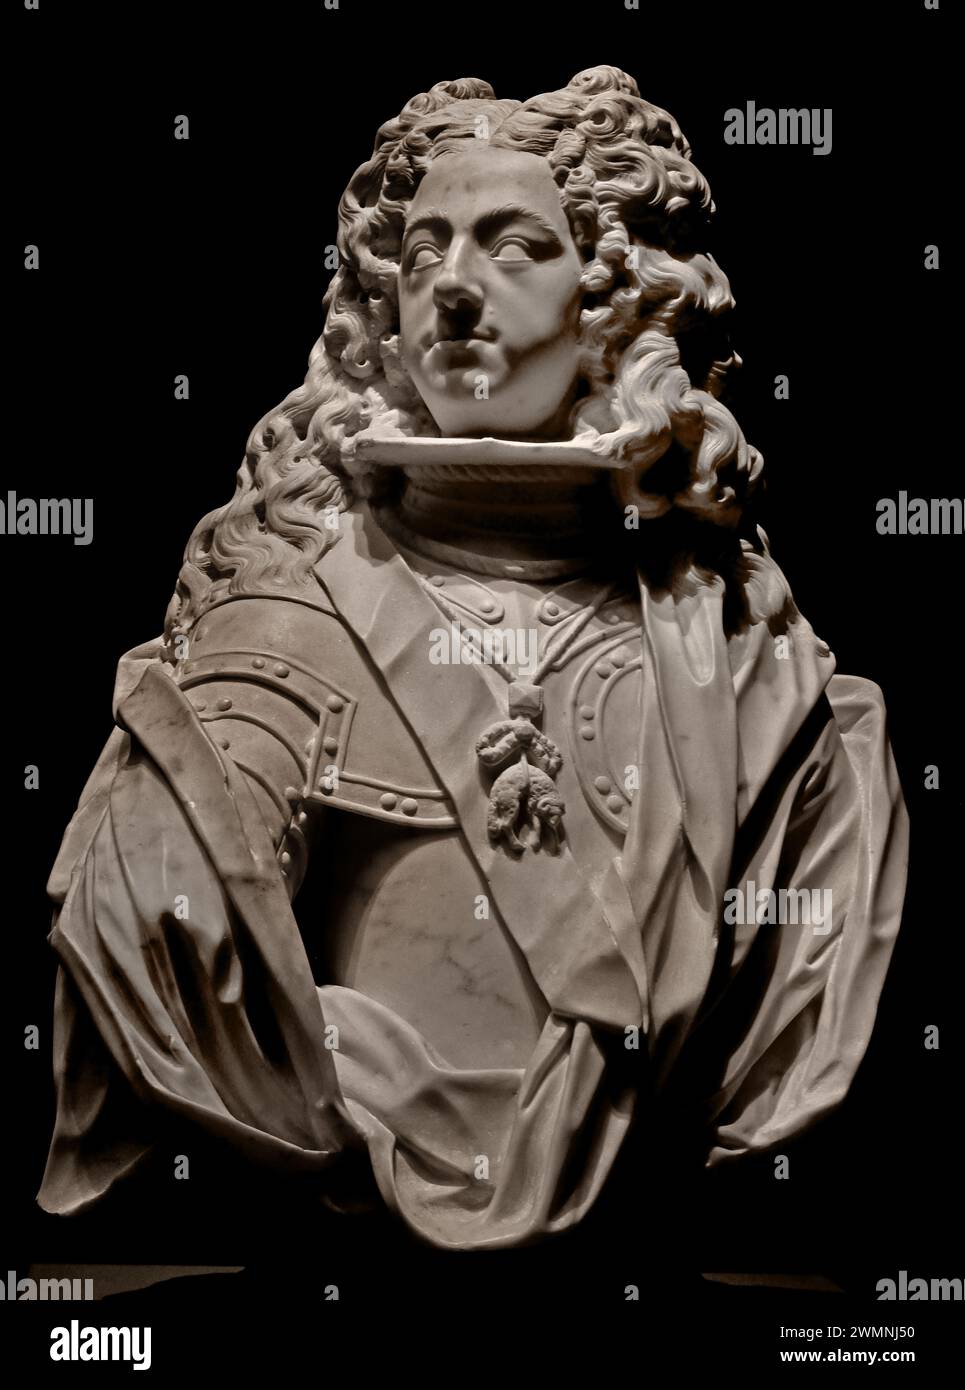 Re Filippo V di Spagna 1700 di Jan Pieter Baurscheit i 1669-1728 Museo reale di Belle Arti, Anversa, Belgio, Belgio. Foto Stock